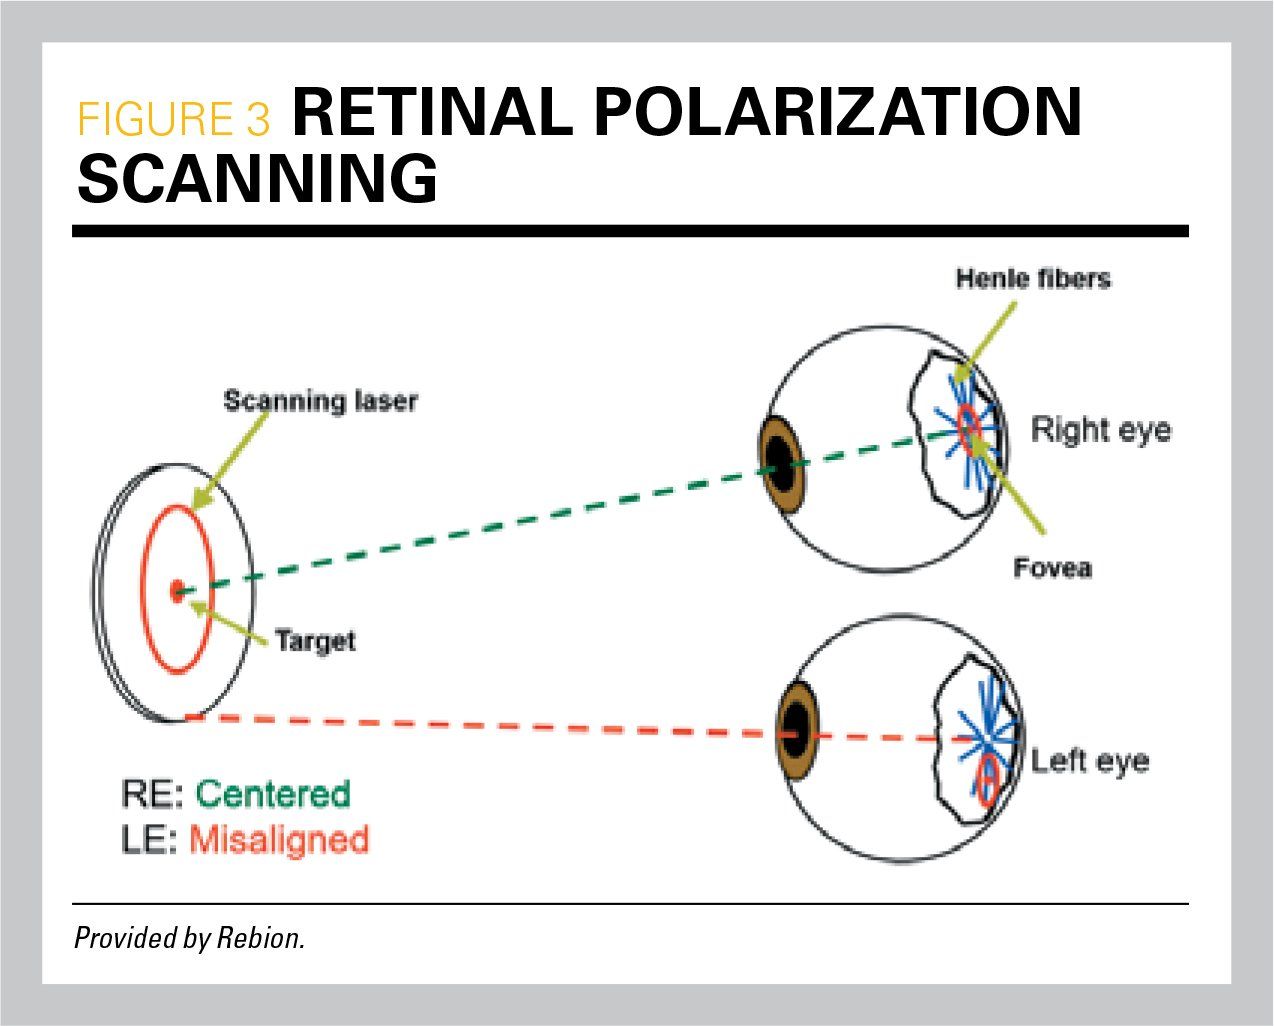 Retinal polarization